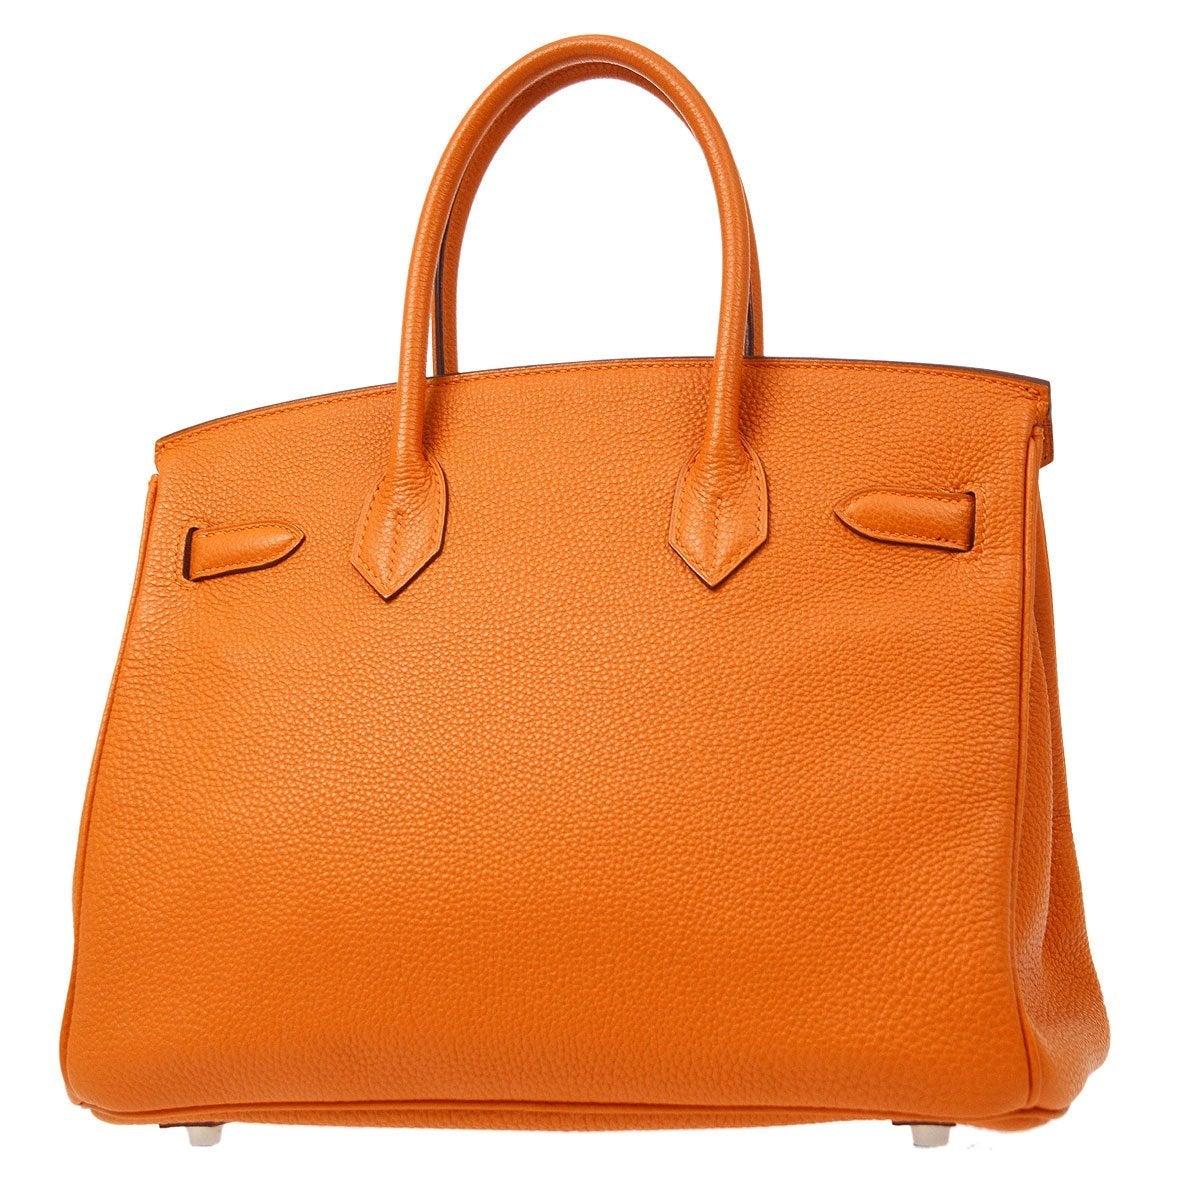 Women's HERMES Birkin 30 Orange Togo Leather Gold Hardware Top Handle Tote Bag in Box